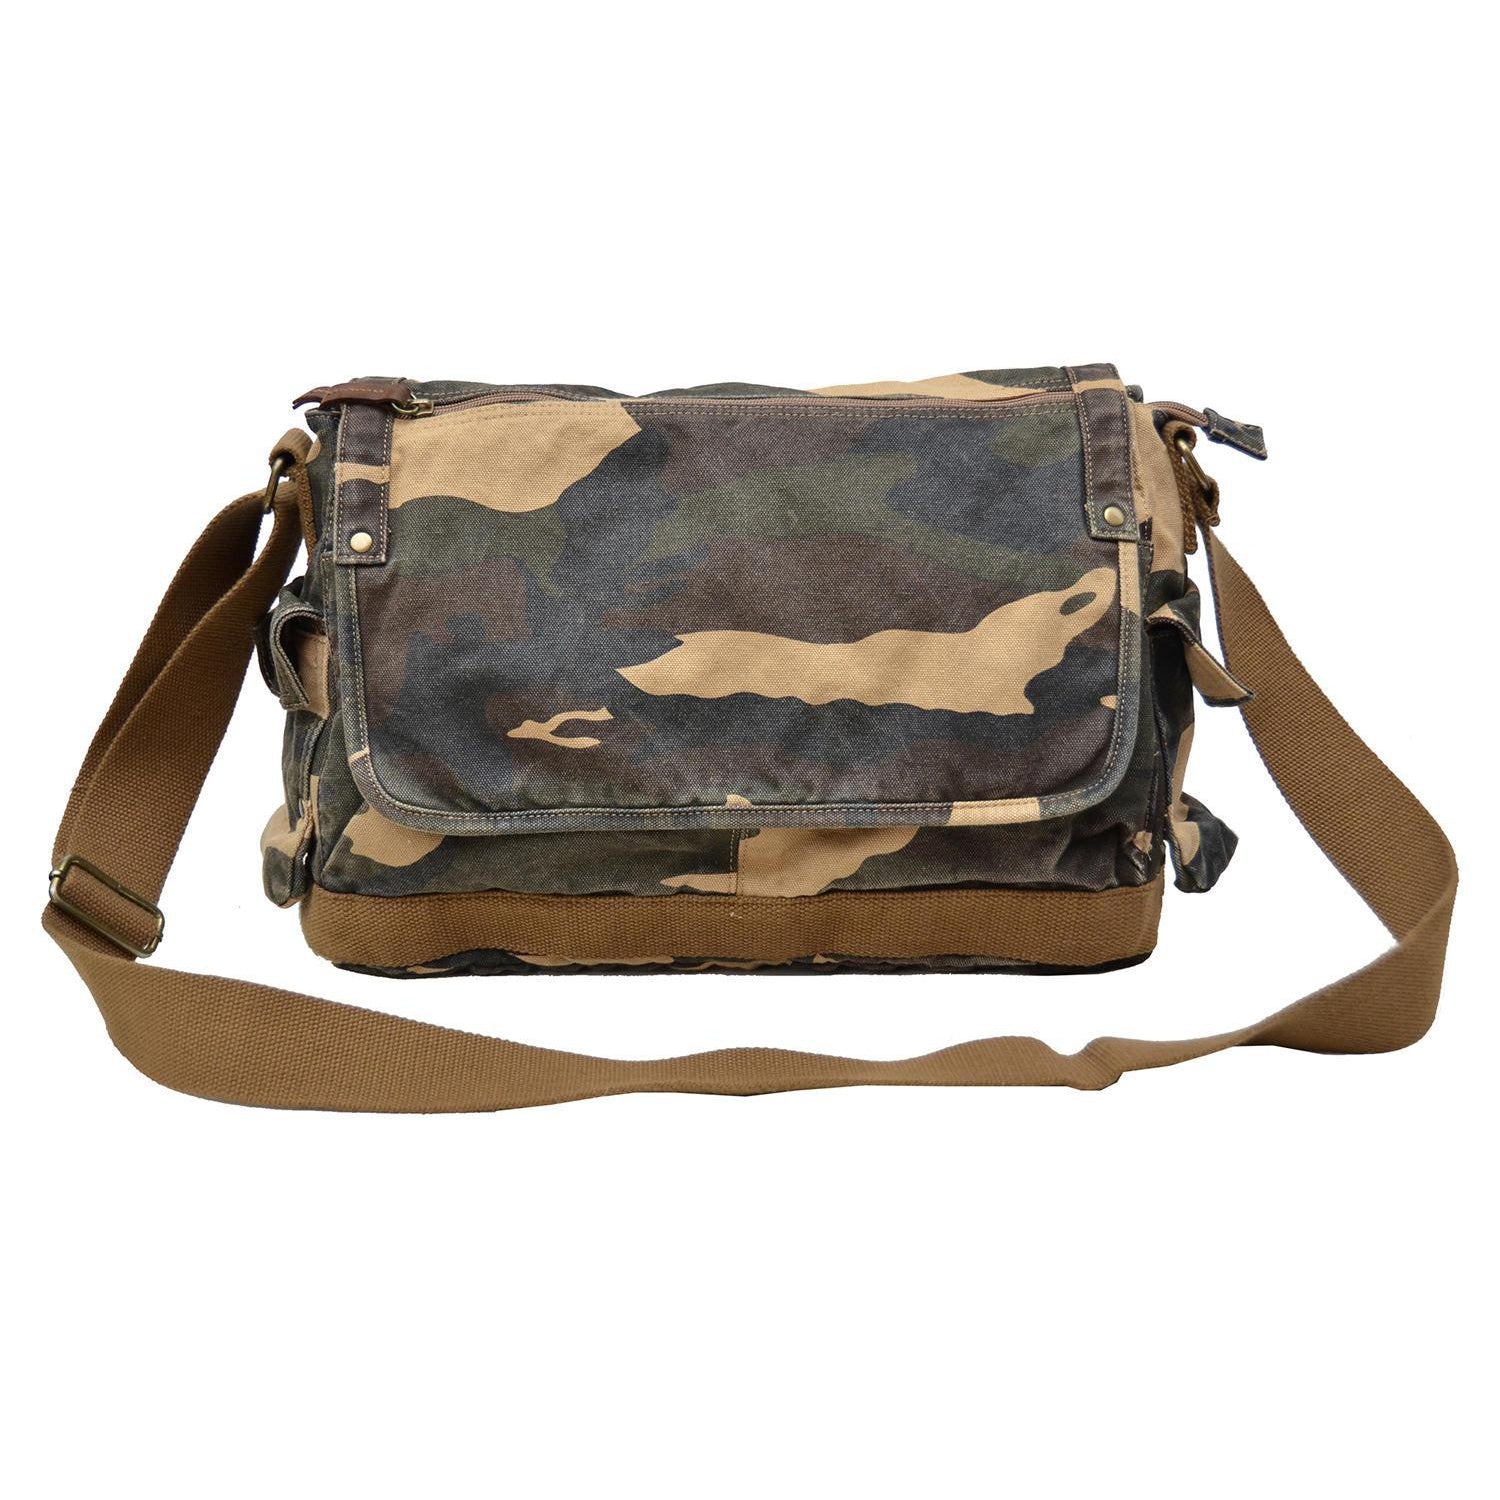 Gootium Canvas Messenger Bags #30622